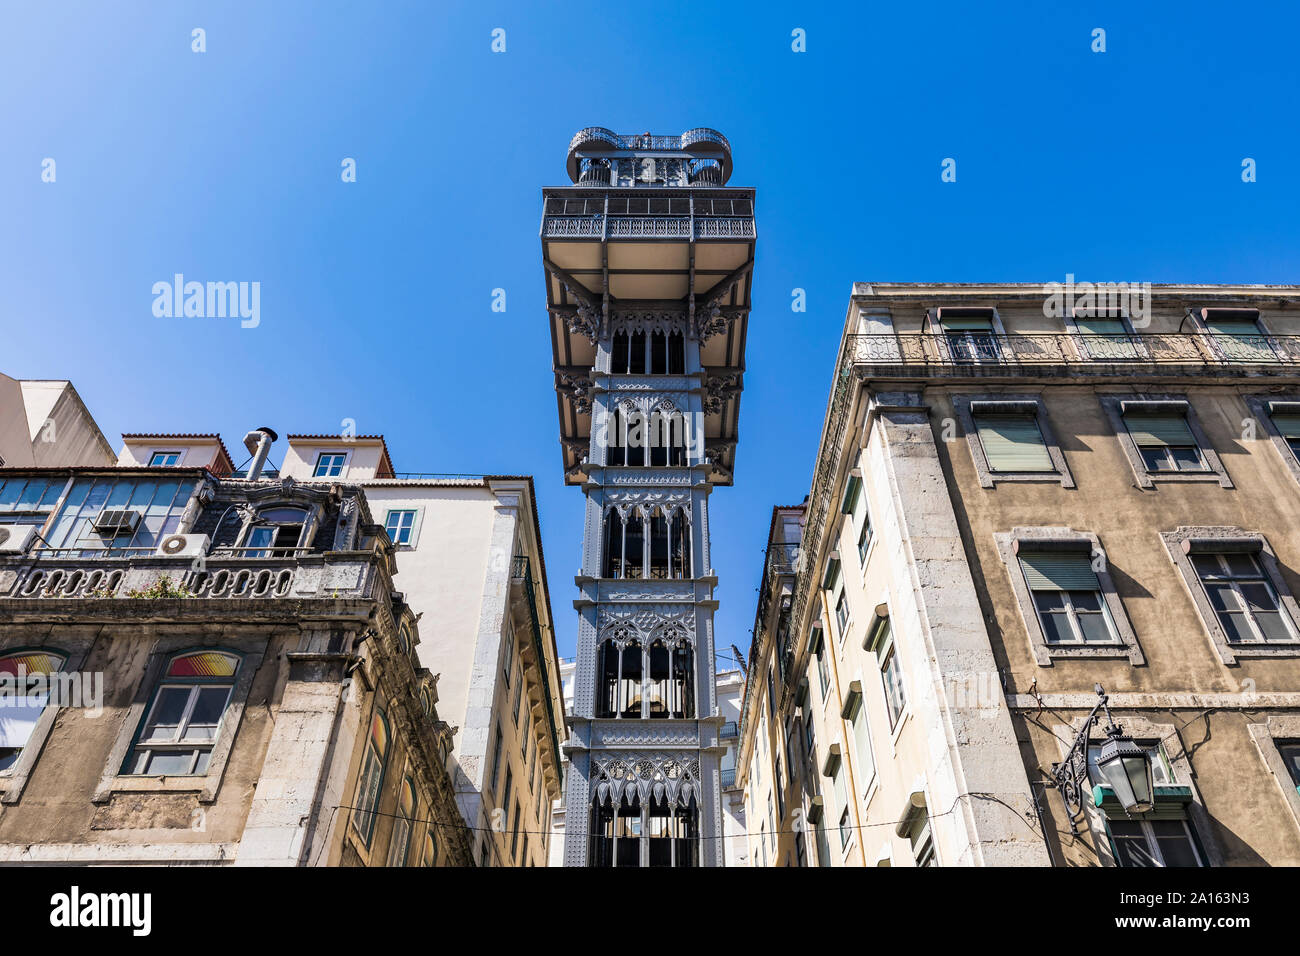 Portugal, Lisbon, Low angle view of Santa Justa Lift Stock Photo